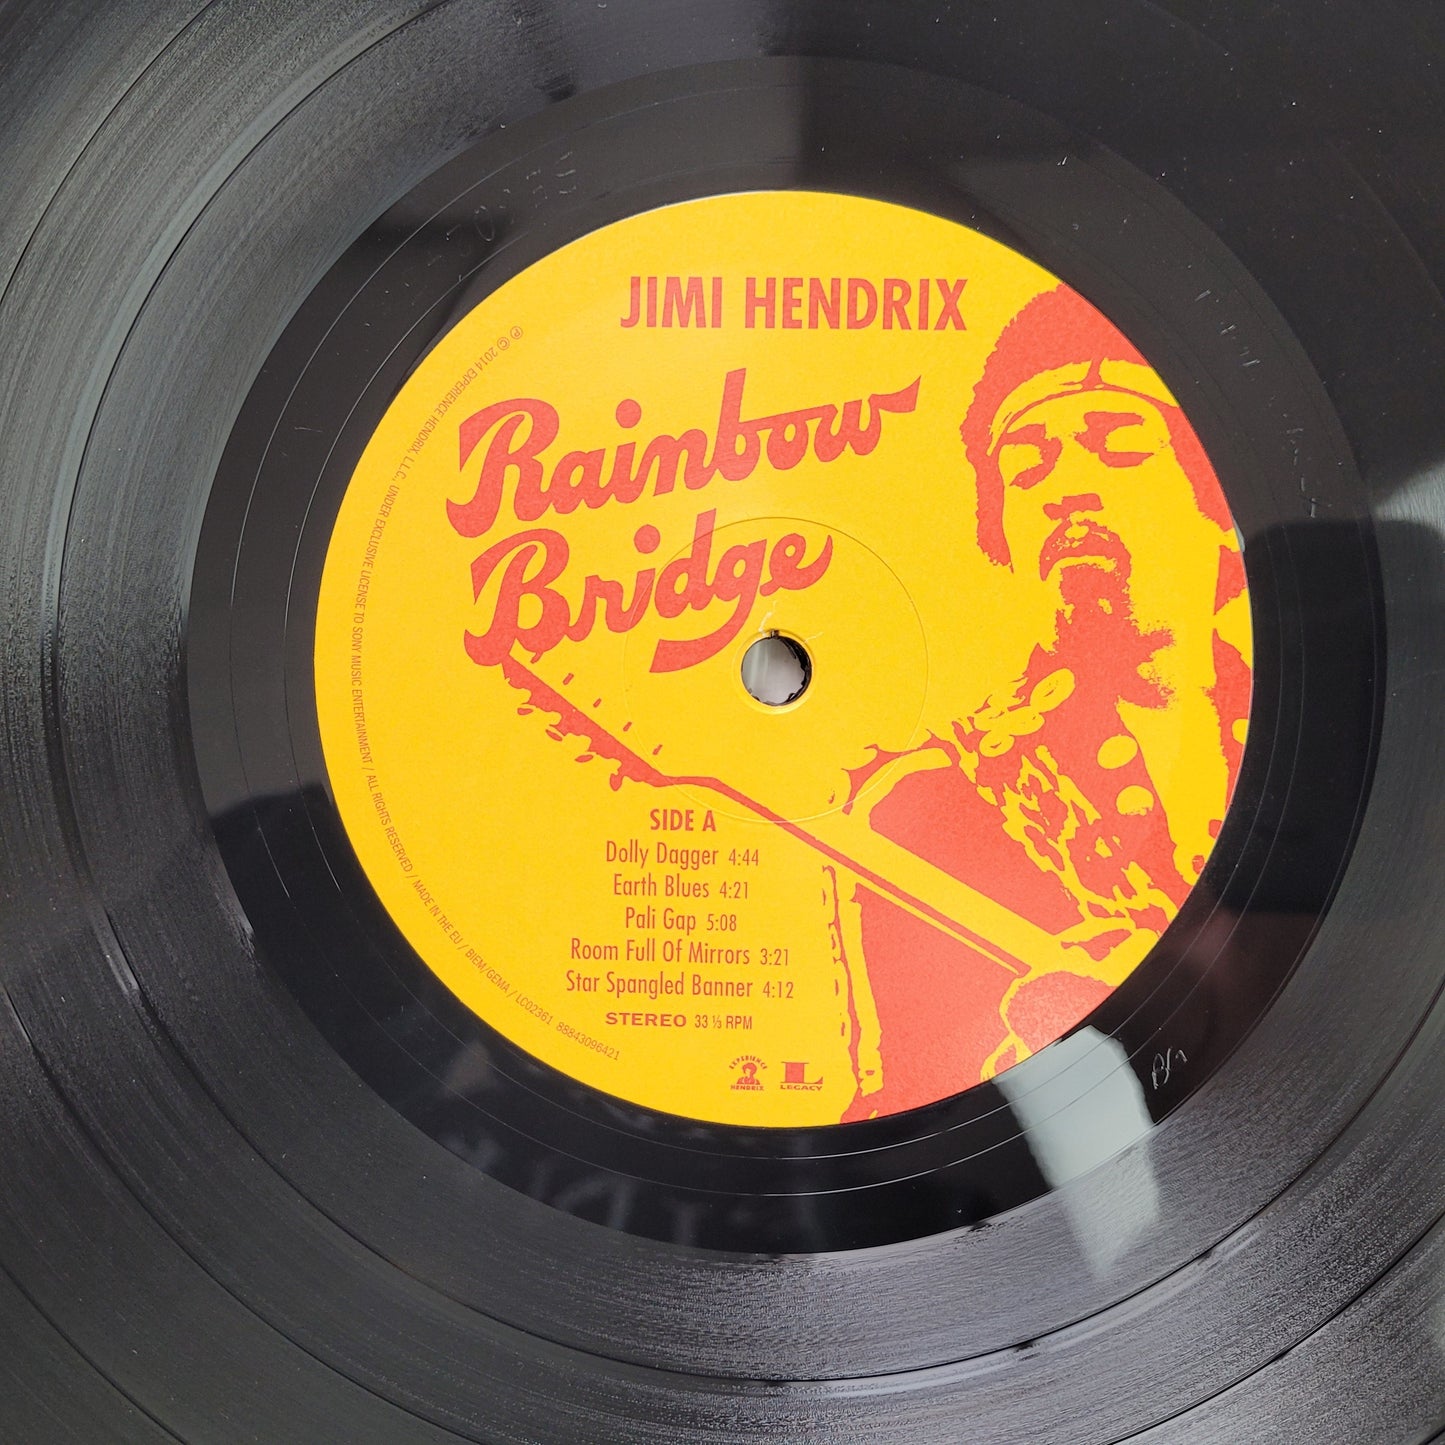 Jimi Hendrix,Rainbow Bridge - OST,+ hype sticker,Audiophile edition,LP Album